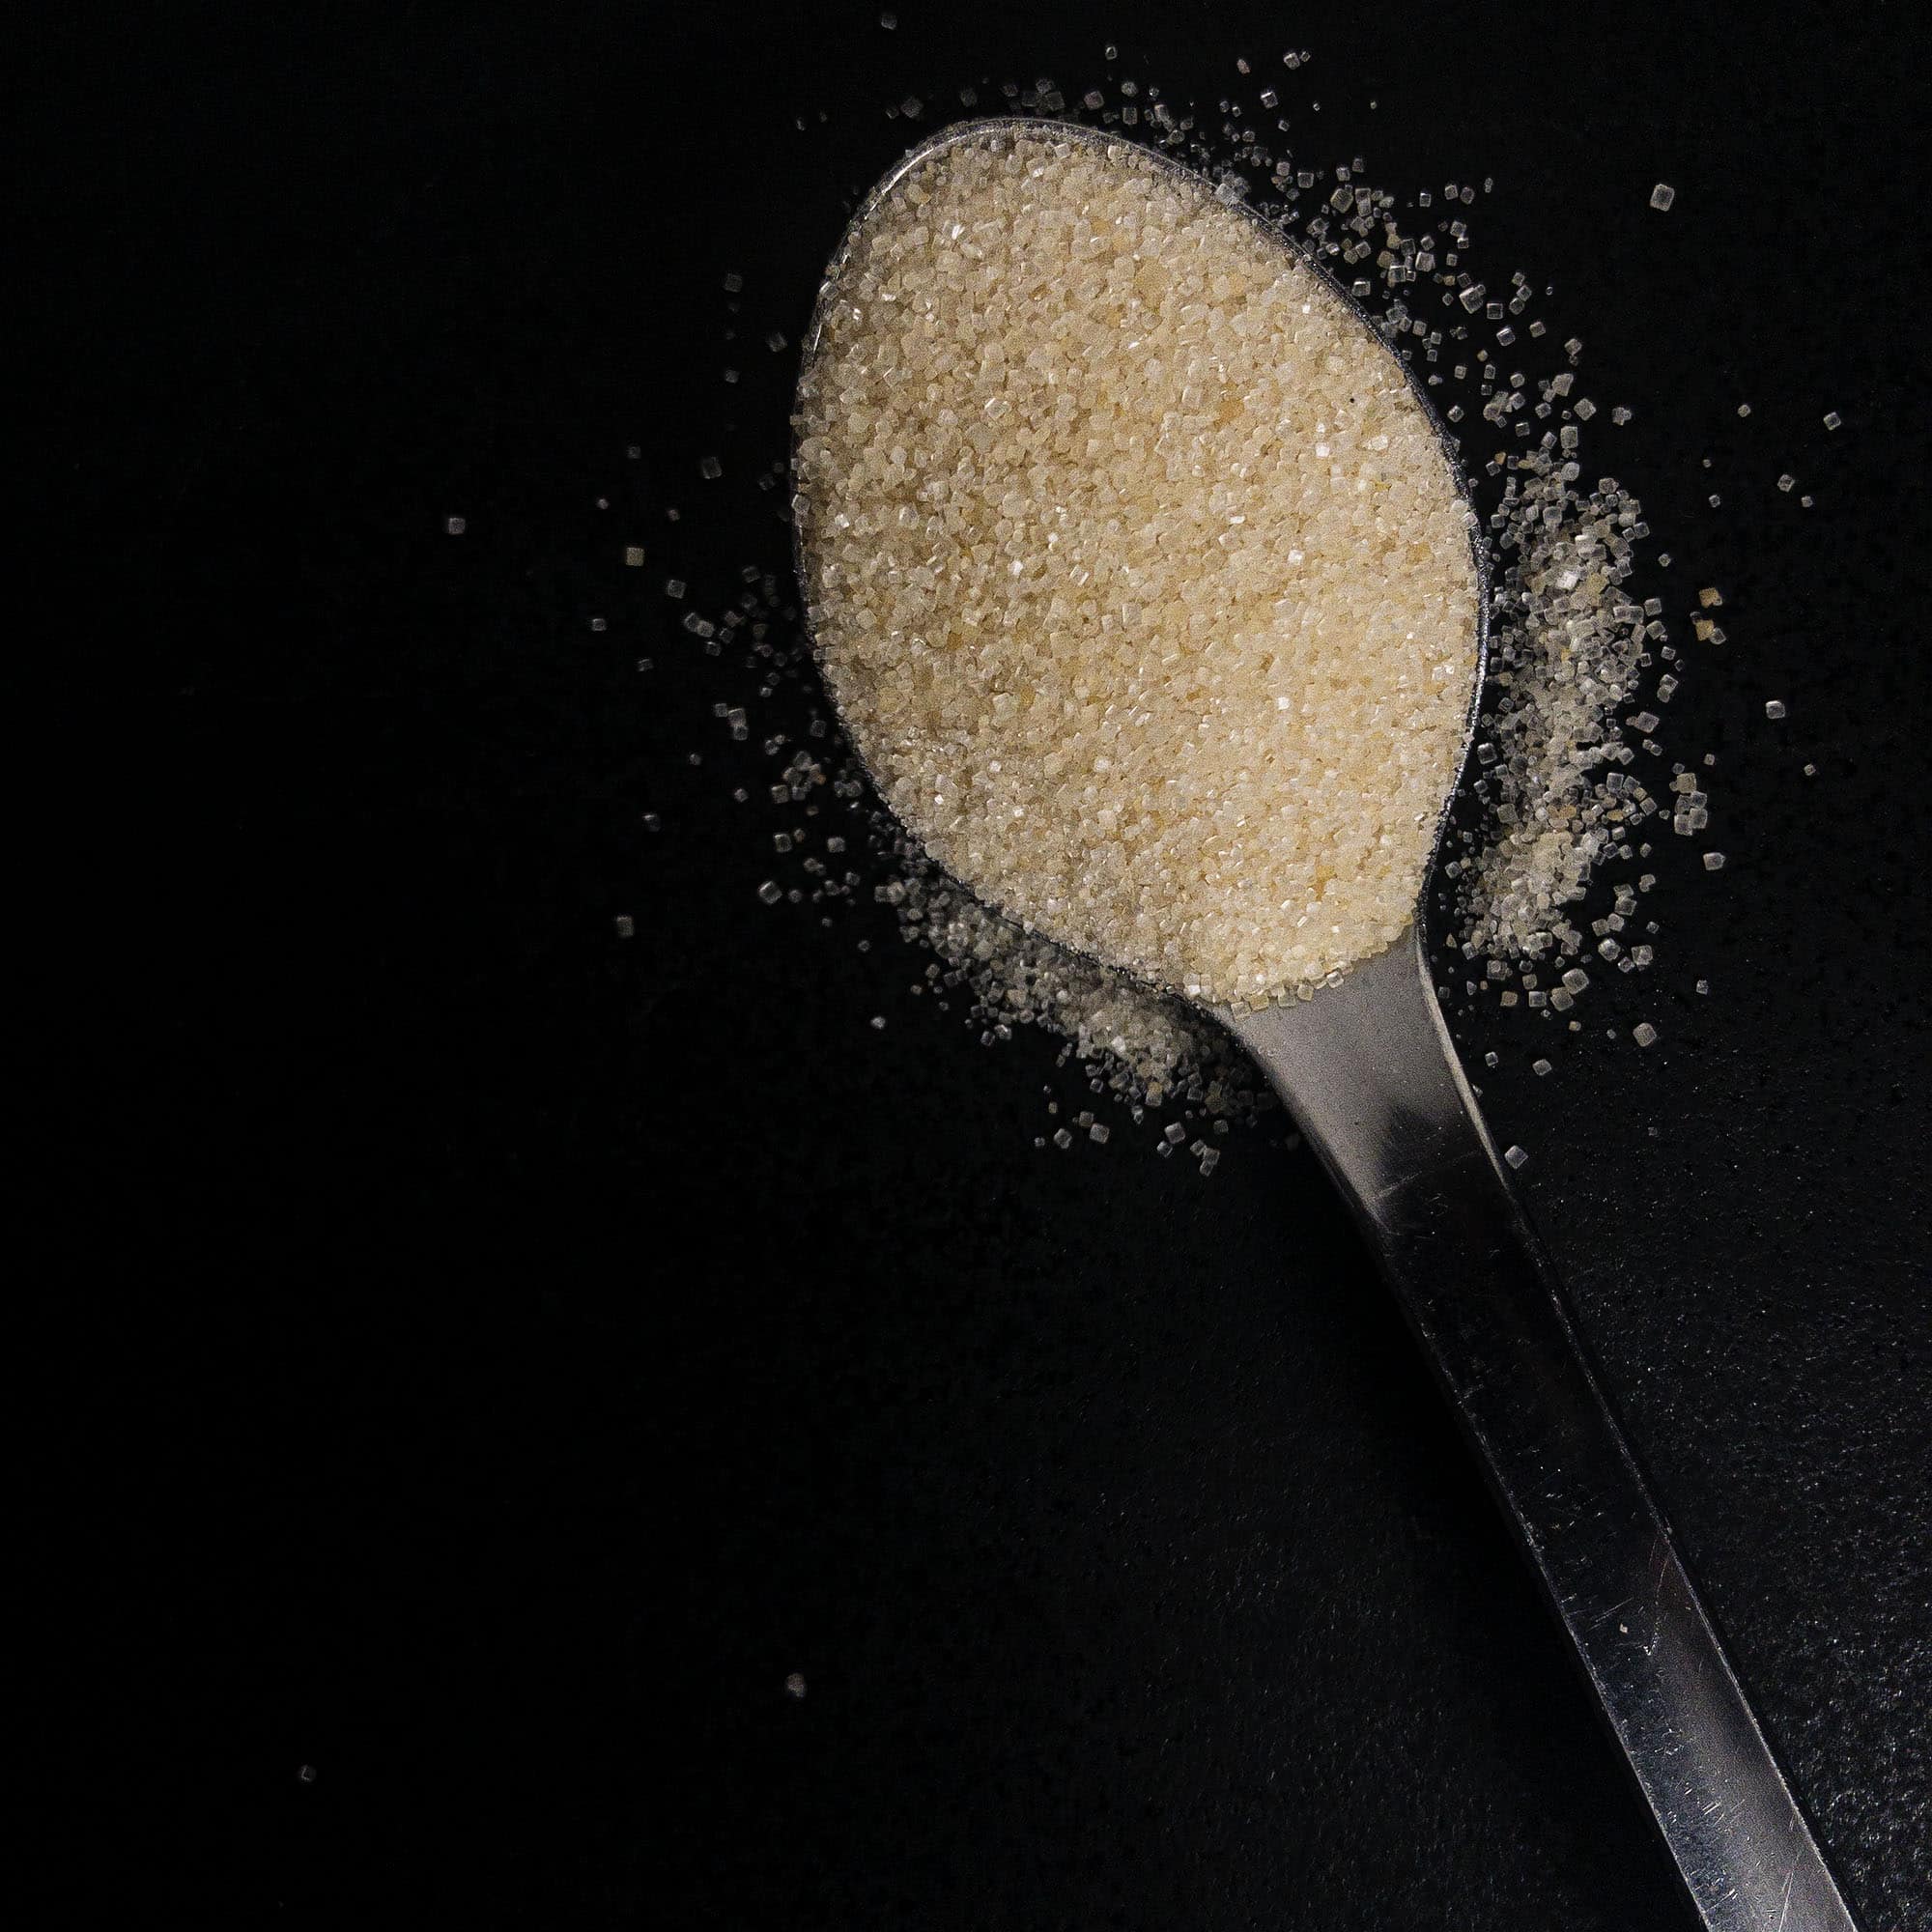 cane sugar on a spoon, against a black background